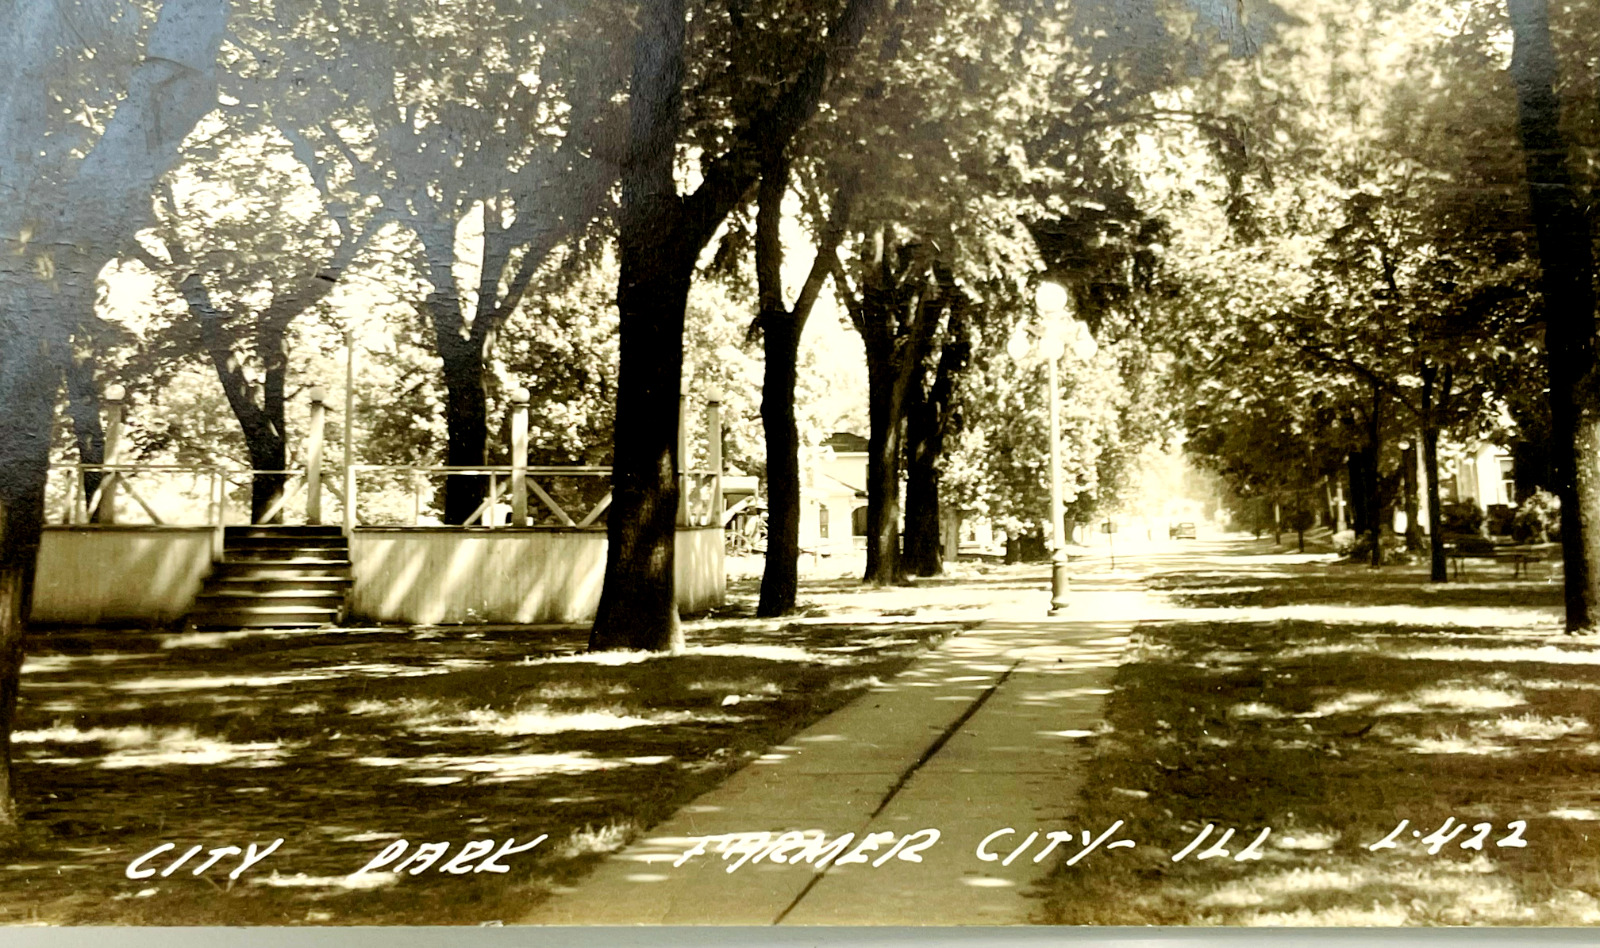 FARMER CITY ILLINOIS 1946 Original B&W Photo Postcard Unposted CITY PARK RPPC